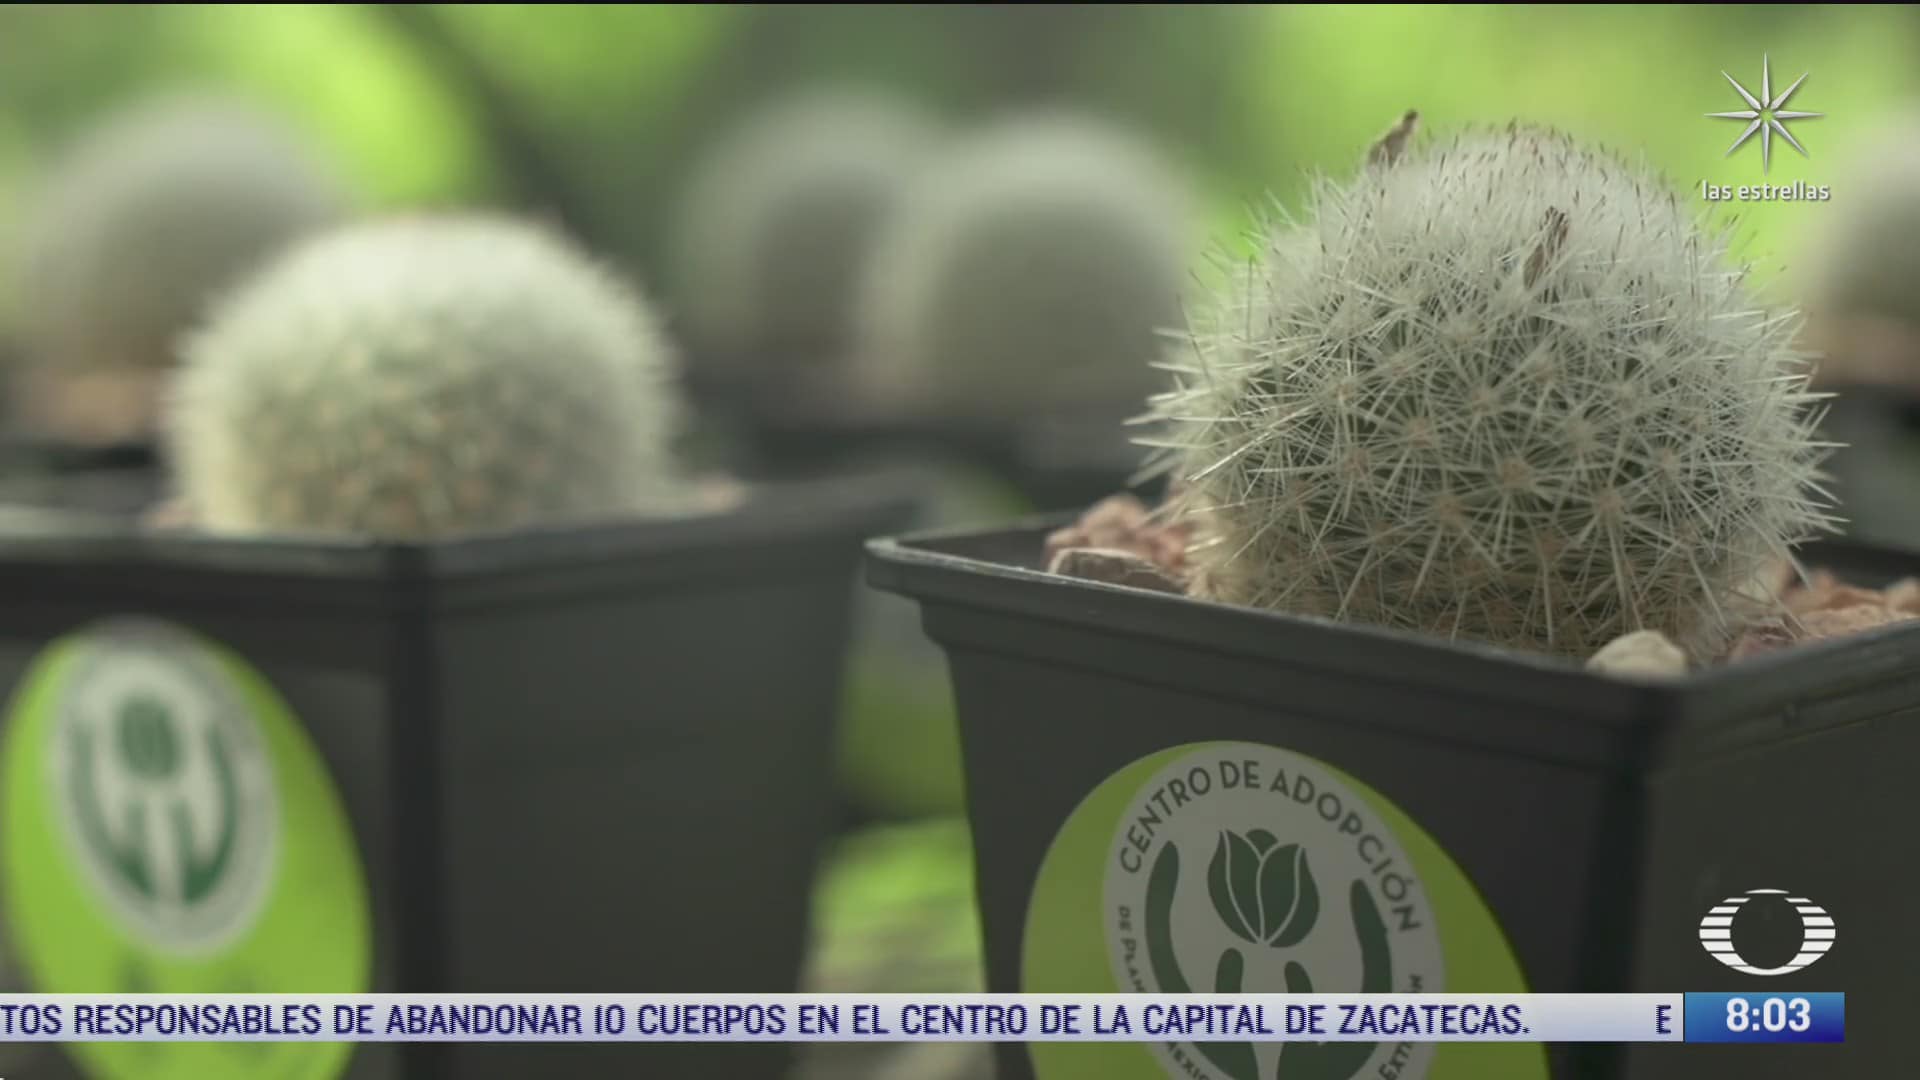 jardin botanico de la unam alberga la coleccion de plantas vivas mas grande de mexico